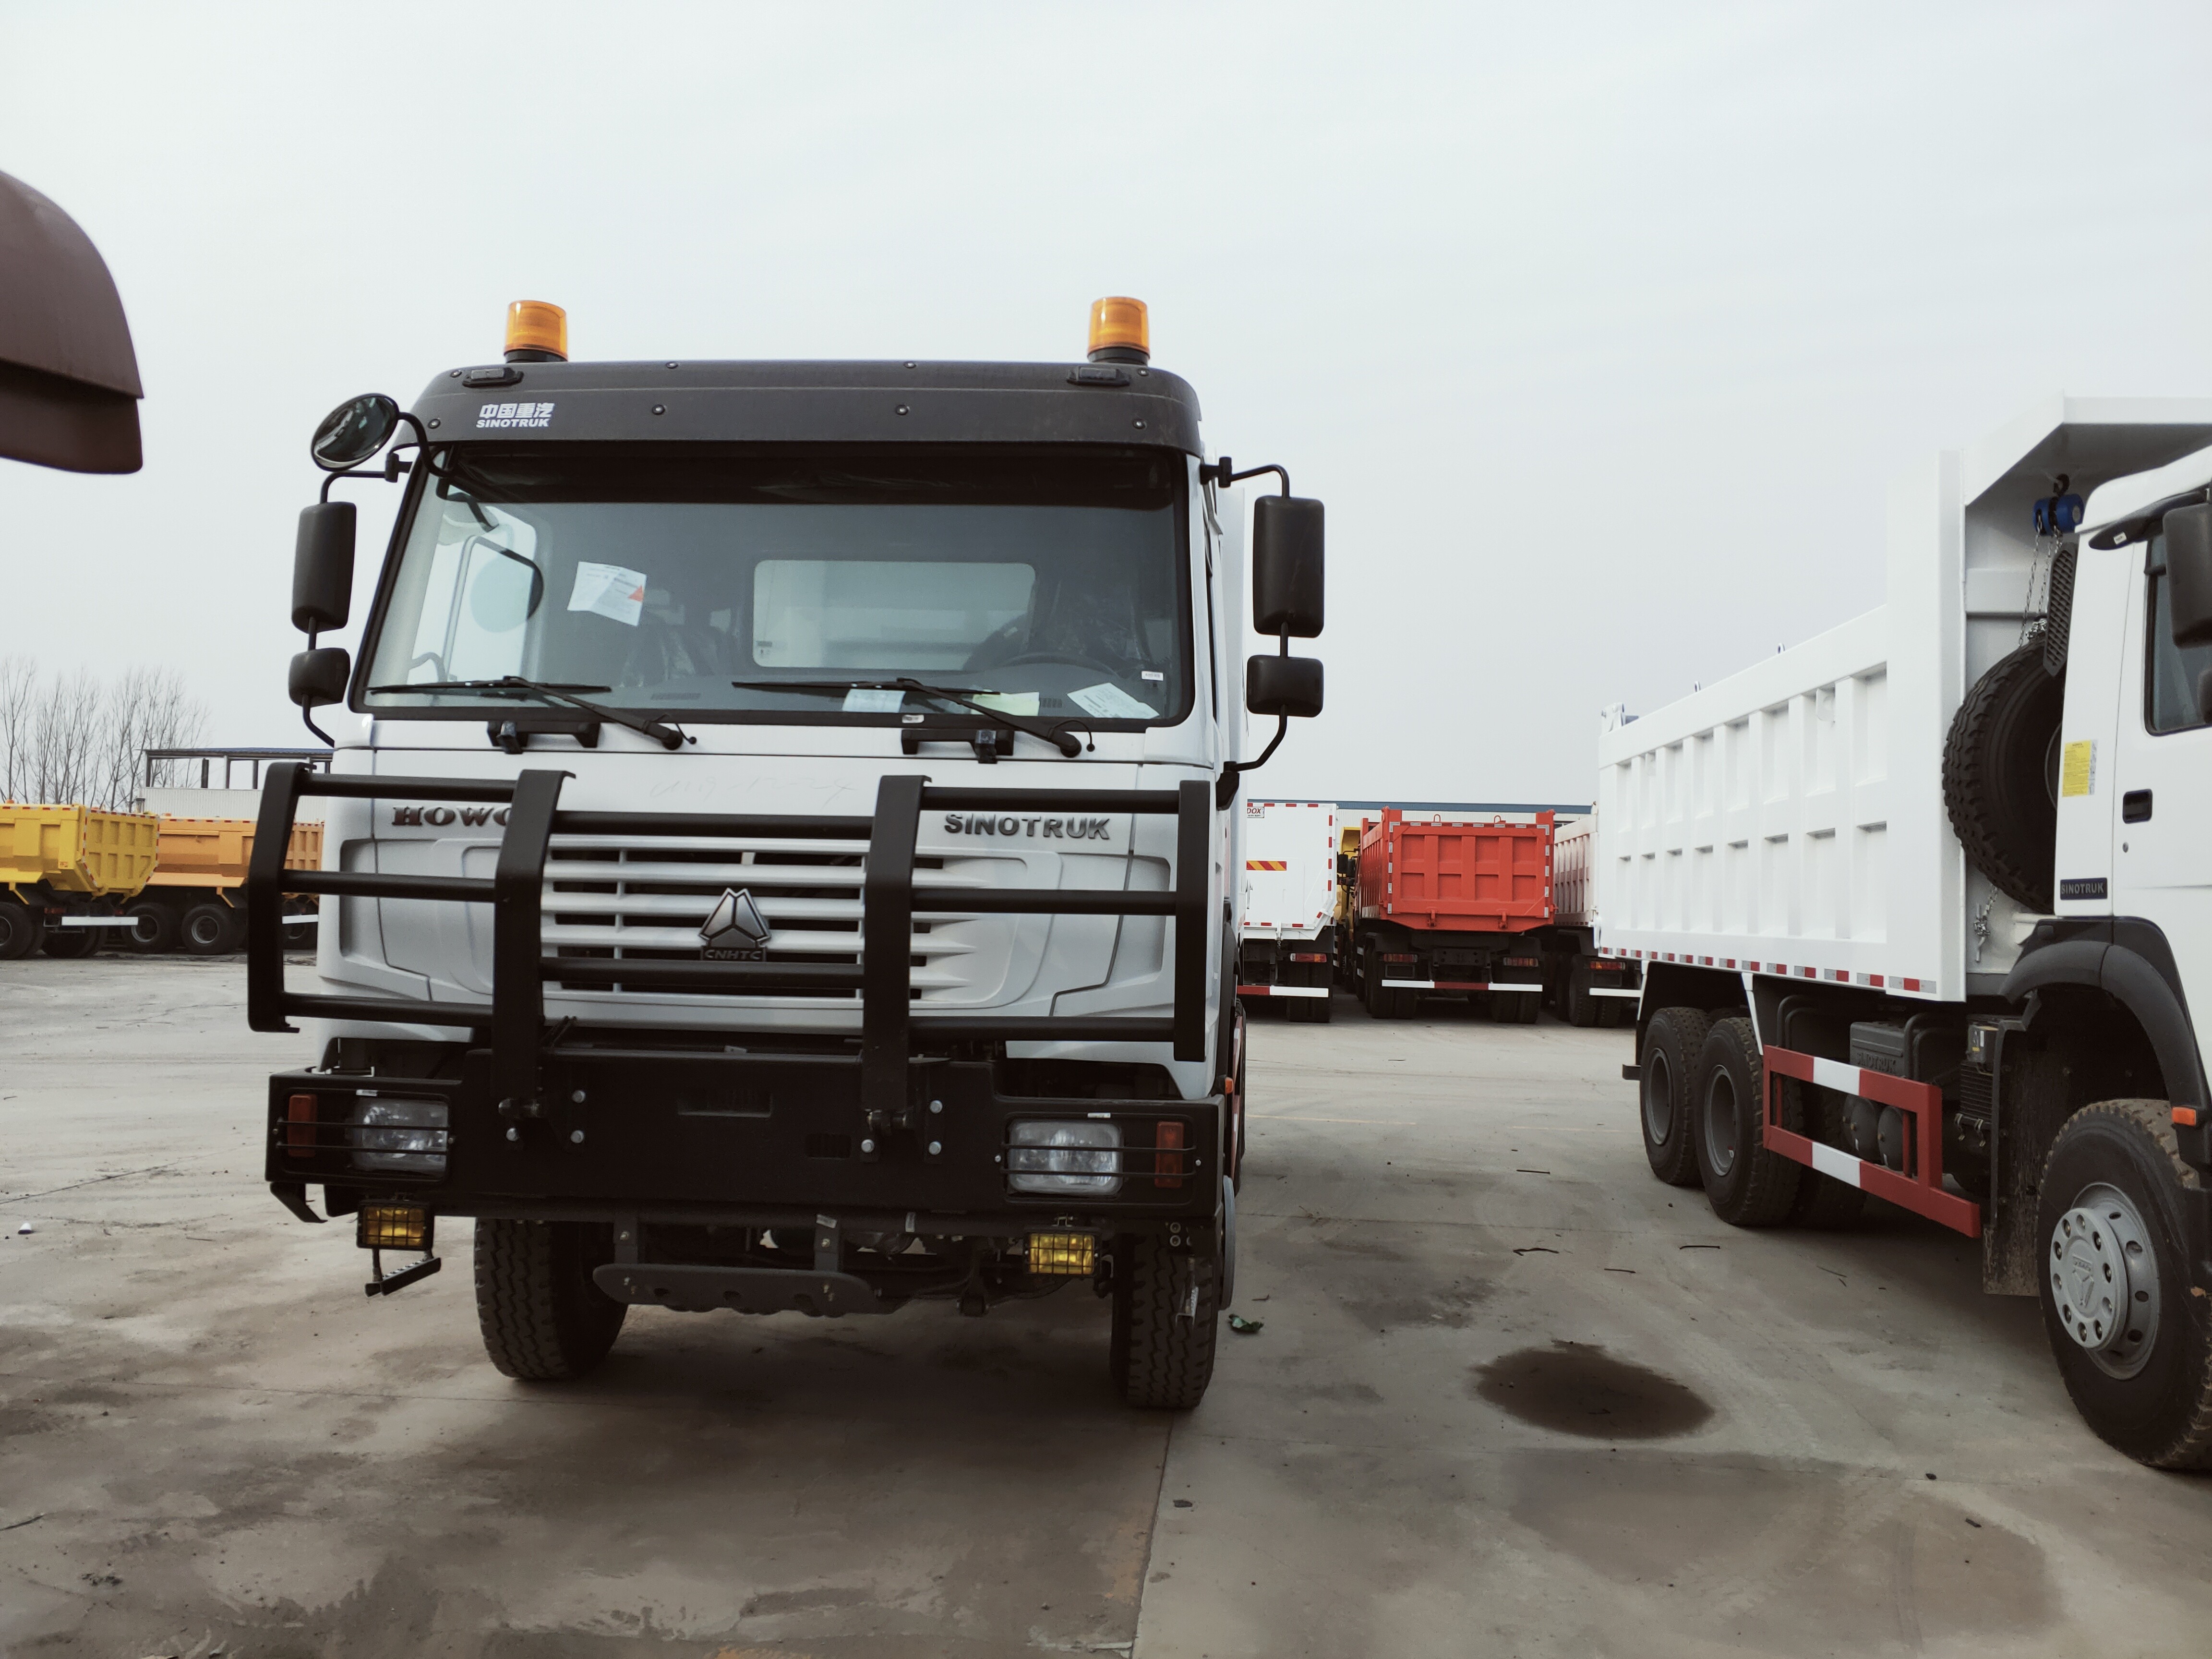 336HP βαρέων καθηκόντων φορτηγό απορρίψεων με μετάδοση HW19710 και 9 τόνους μπροστινών αξόνων